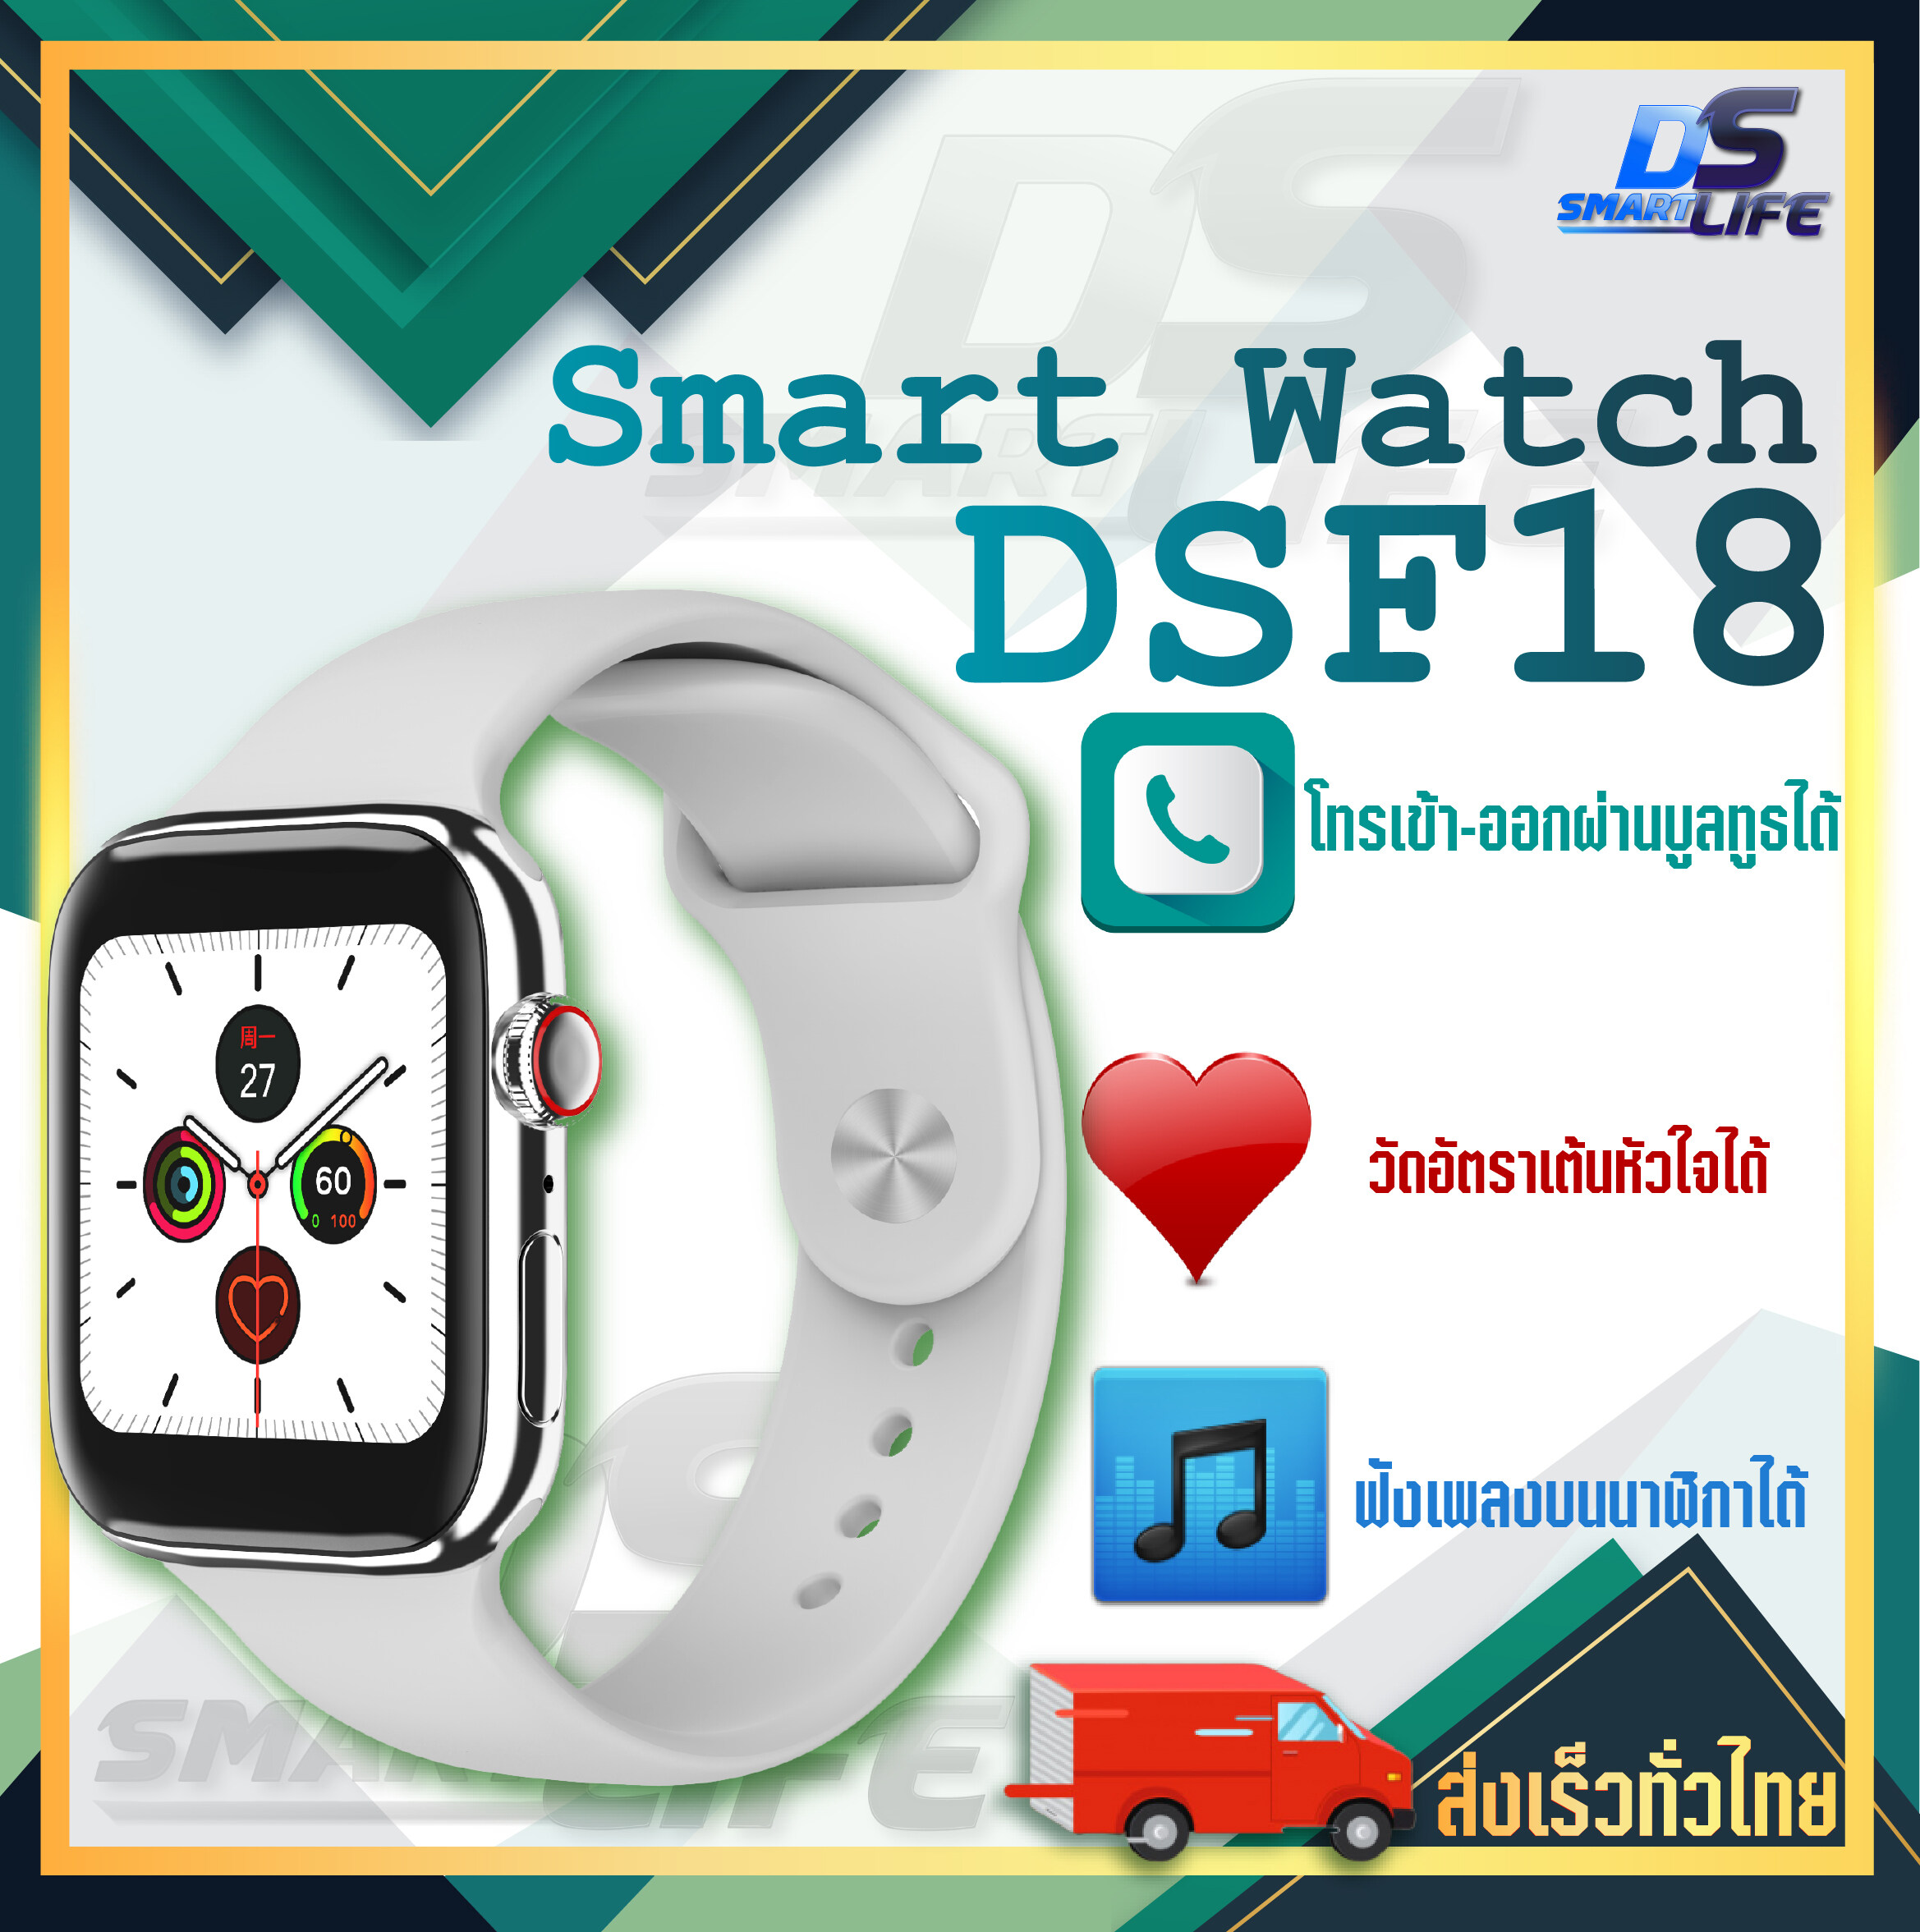 Smart Watch F18 นาฬิกาสมาร์ทวอทช์ DSF18 [รองรับภาษาไทย] นาฬิกาอัจฉริยะ ฟิตเนสแทรคเกอร์ สายรัดข้อมืออัจฉริยะ สายรัดข้อมือเพื่อสุขภาพ นาฬิกาข้อมือ นาฬิกา นาฬิกาแฟชั่น นาฬิการุ่นใหม่ Smart Band Fitness Tracker Smart Bracelet รุ่นใหม่ปี 2020